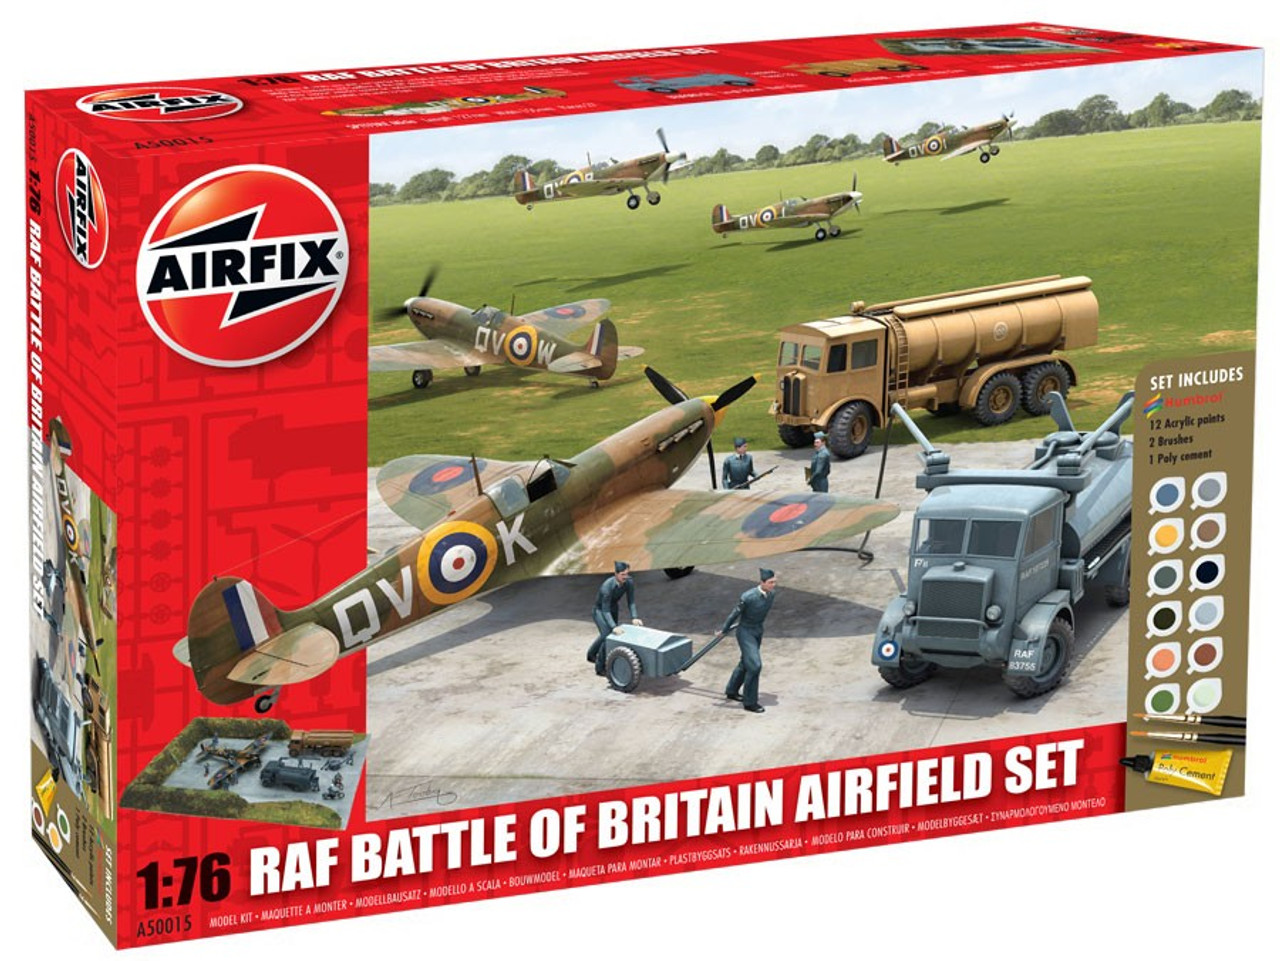 Airfix A50015 RAF Battle of Britain Airfield Set 1:72 Scale Model Kit